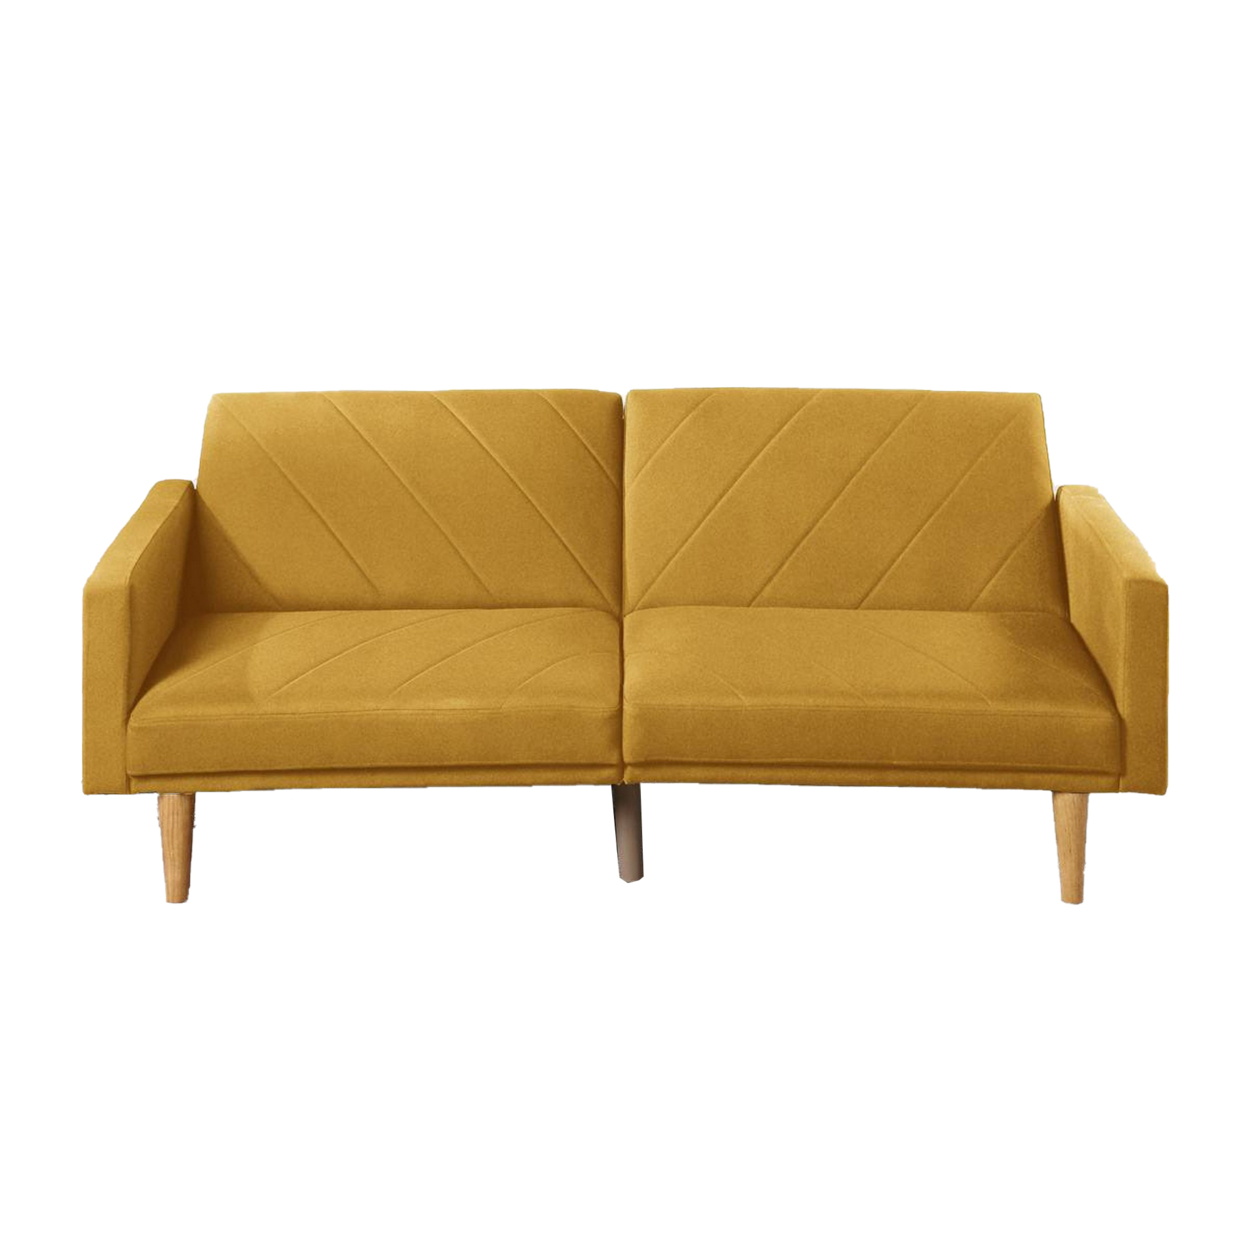 Fabric Adjustable Sofa With Chevron Pattern And Splayed Legs, Yellow- Saltoro Sherpi